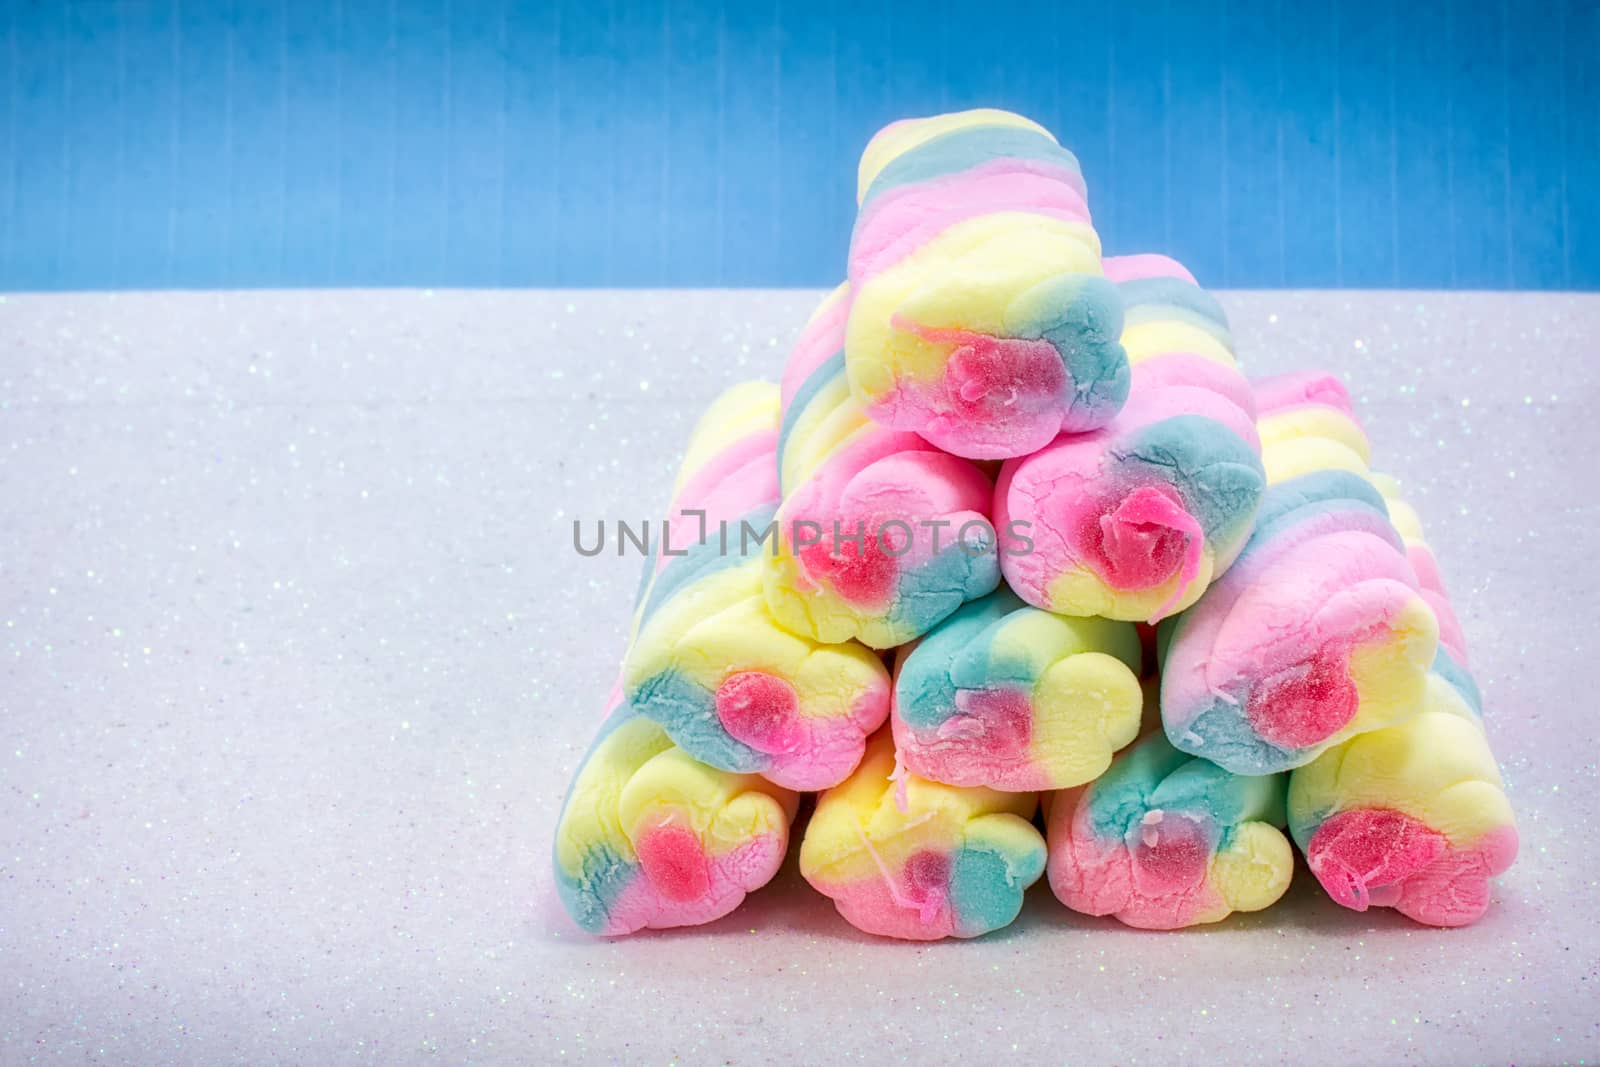 Pile of Colorful Marshmallows by seika_chujo